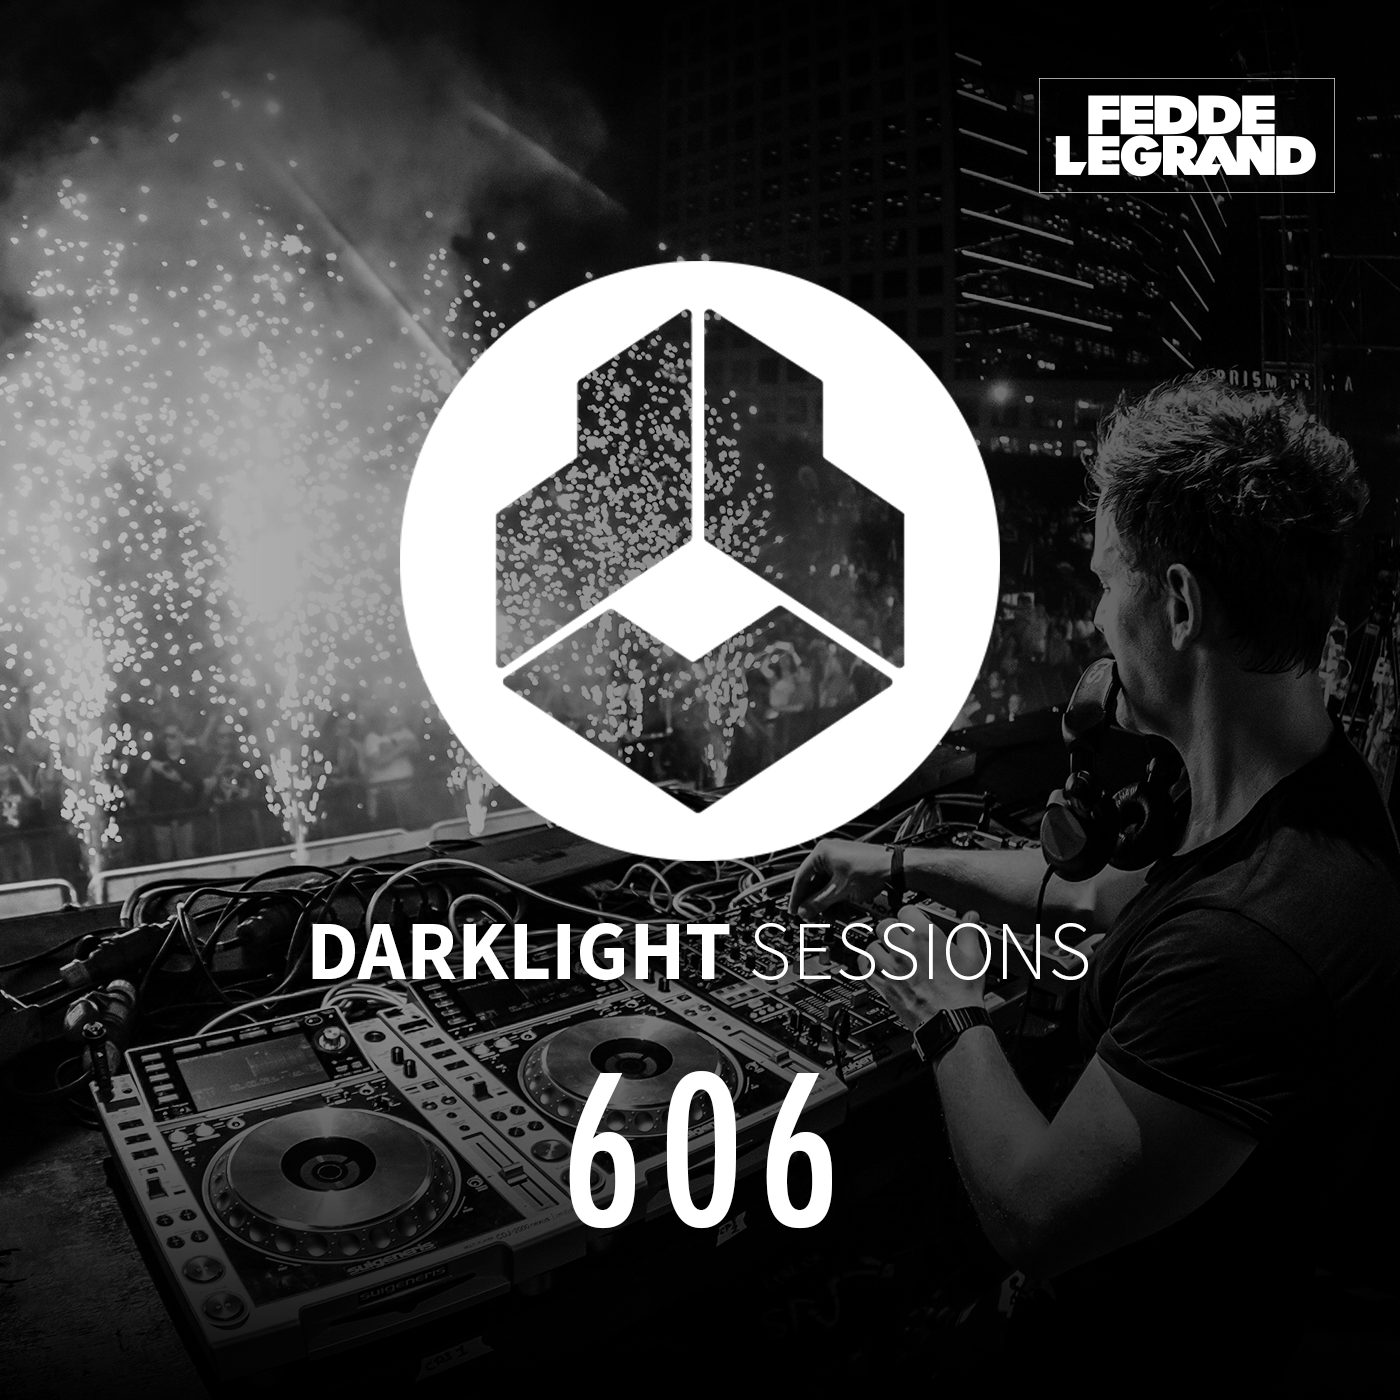 Darklight Sessions 606